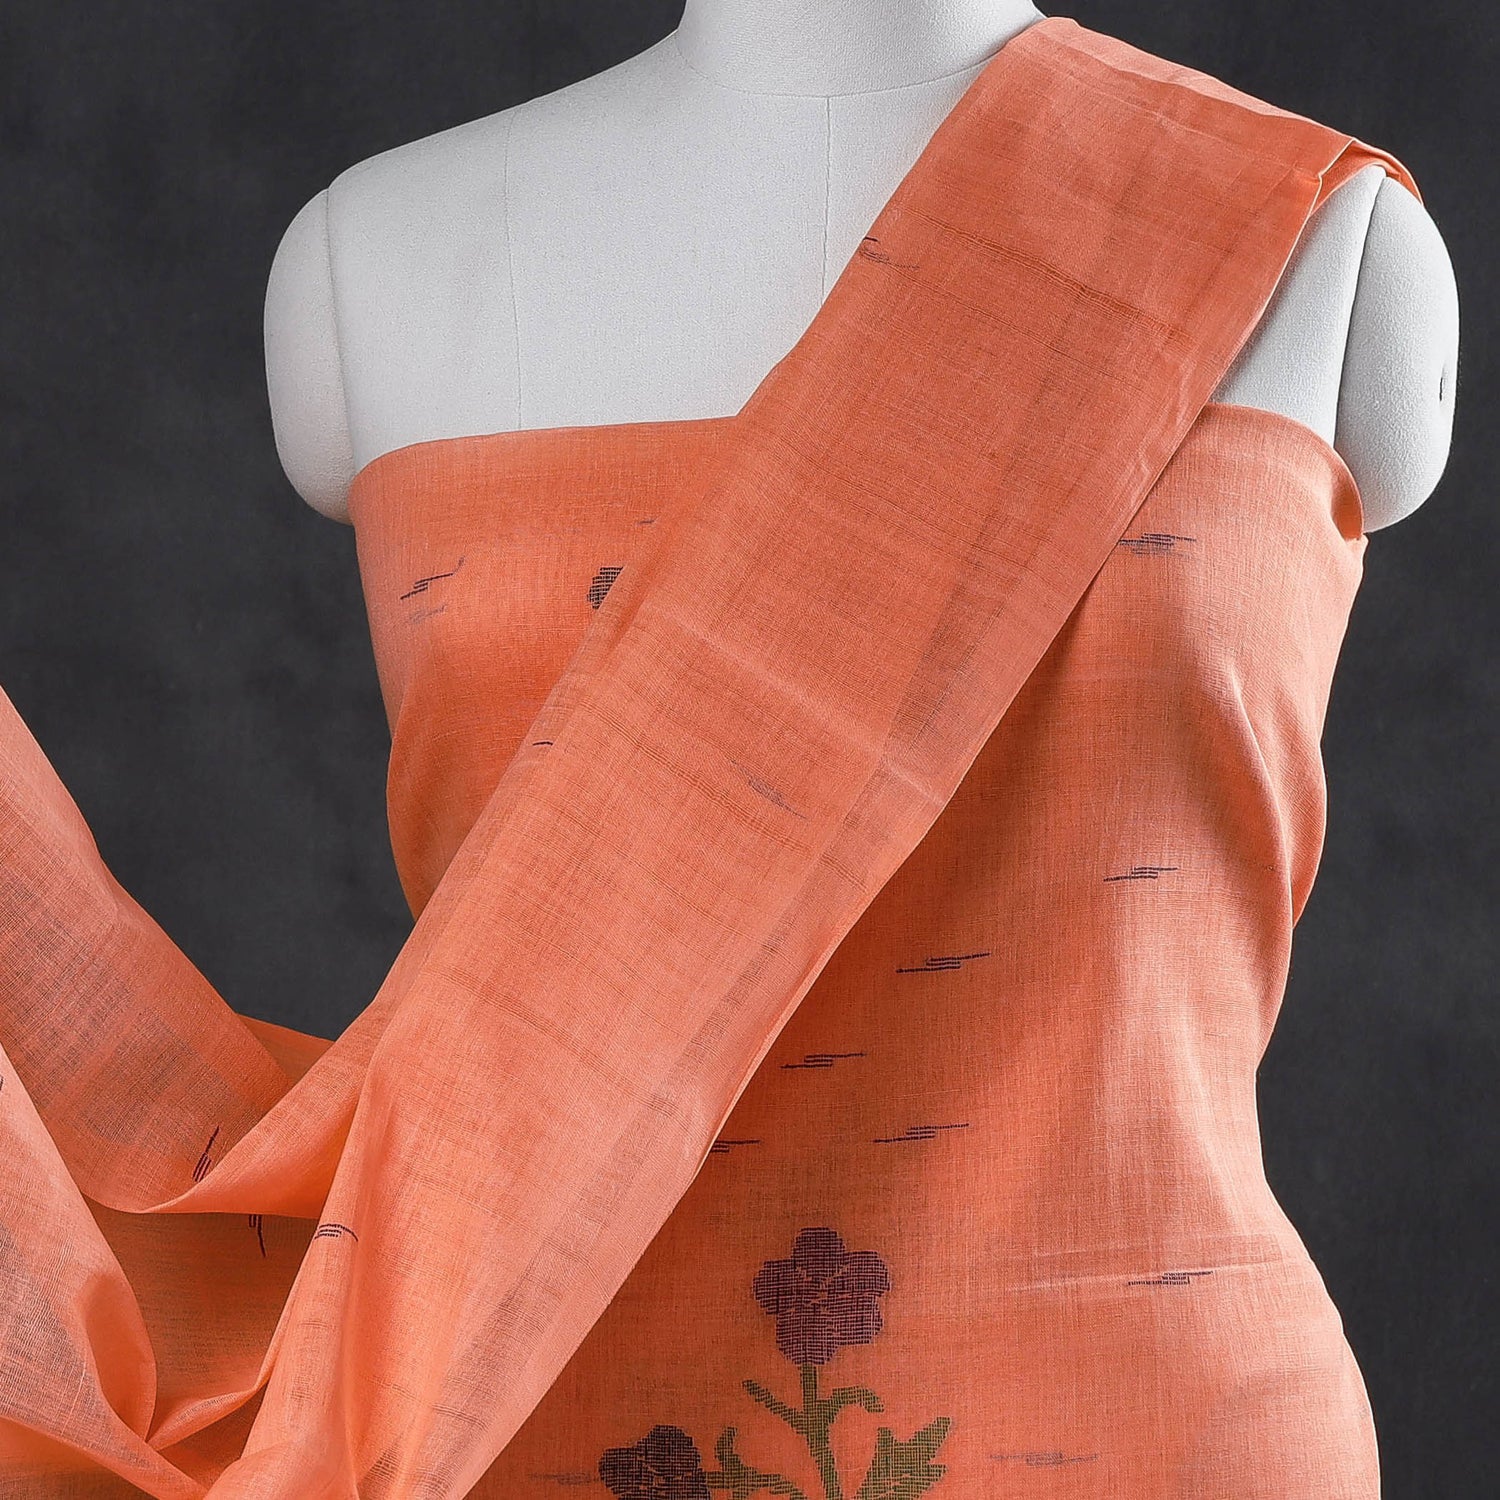 3pc Manipuri Weave Handloom Cotton Suit Material Set